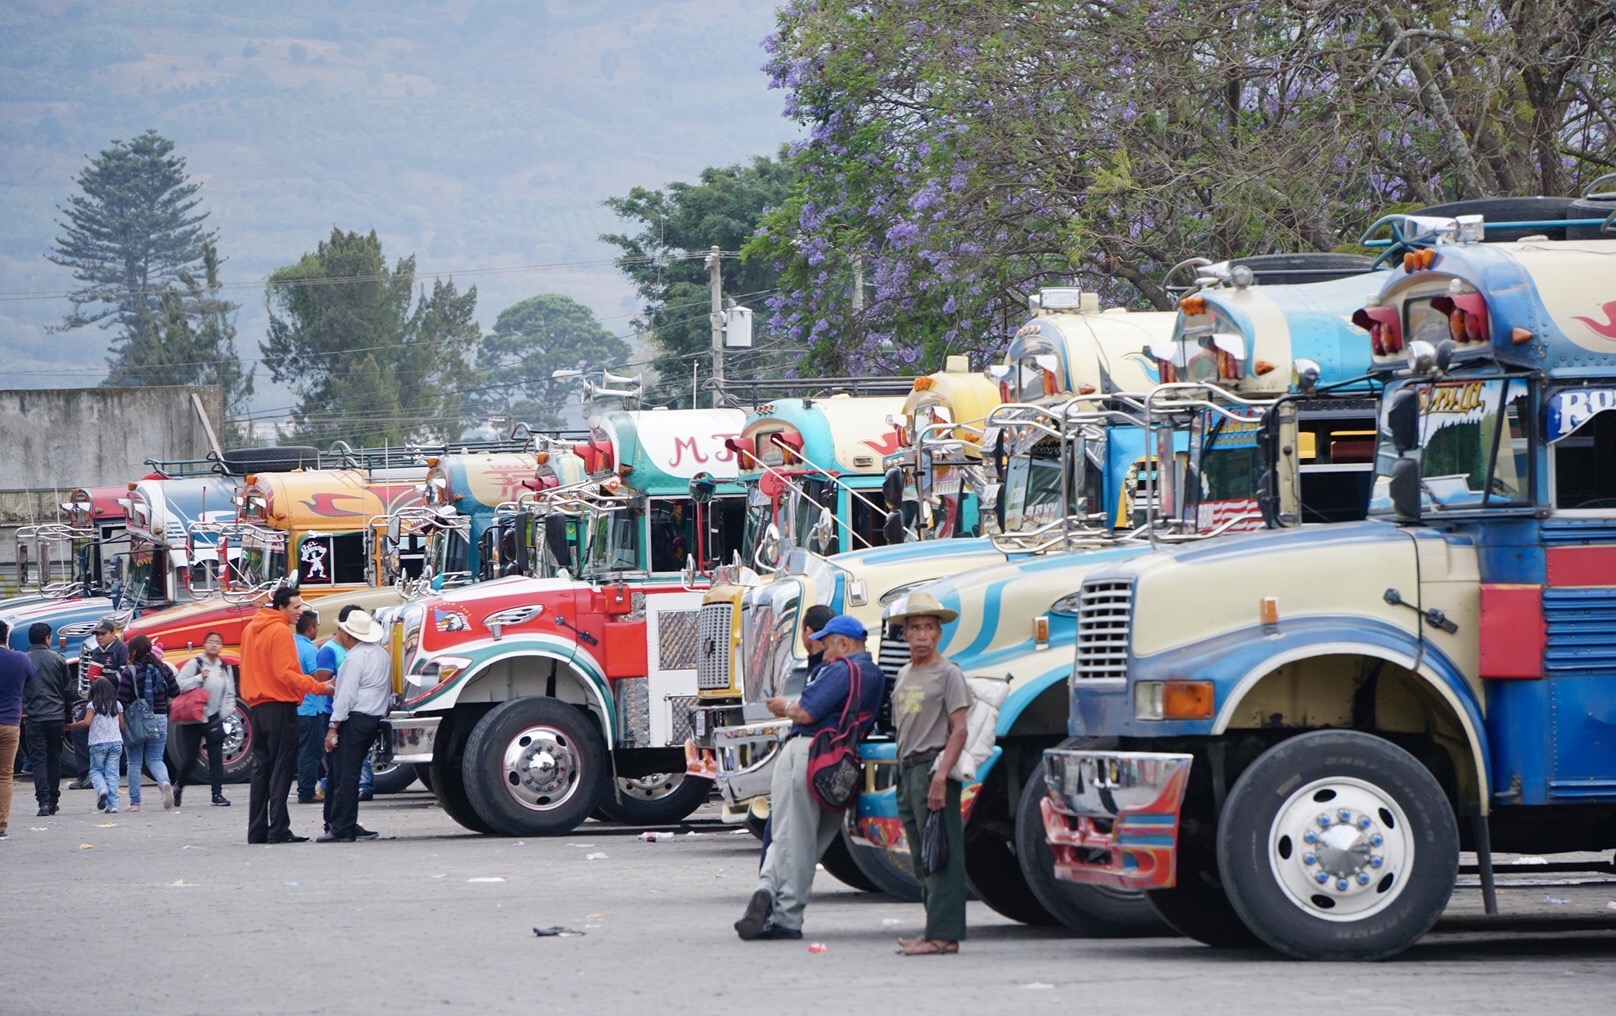 Antigua buses